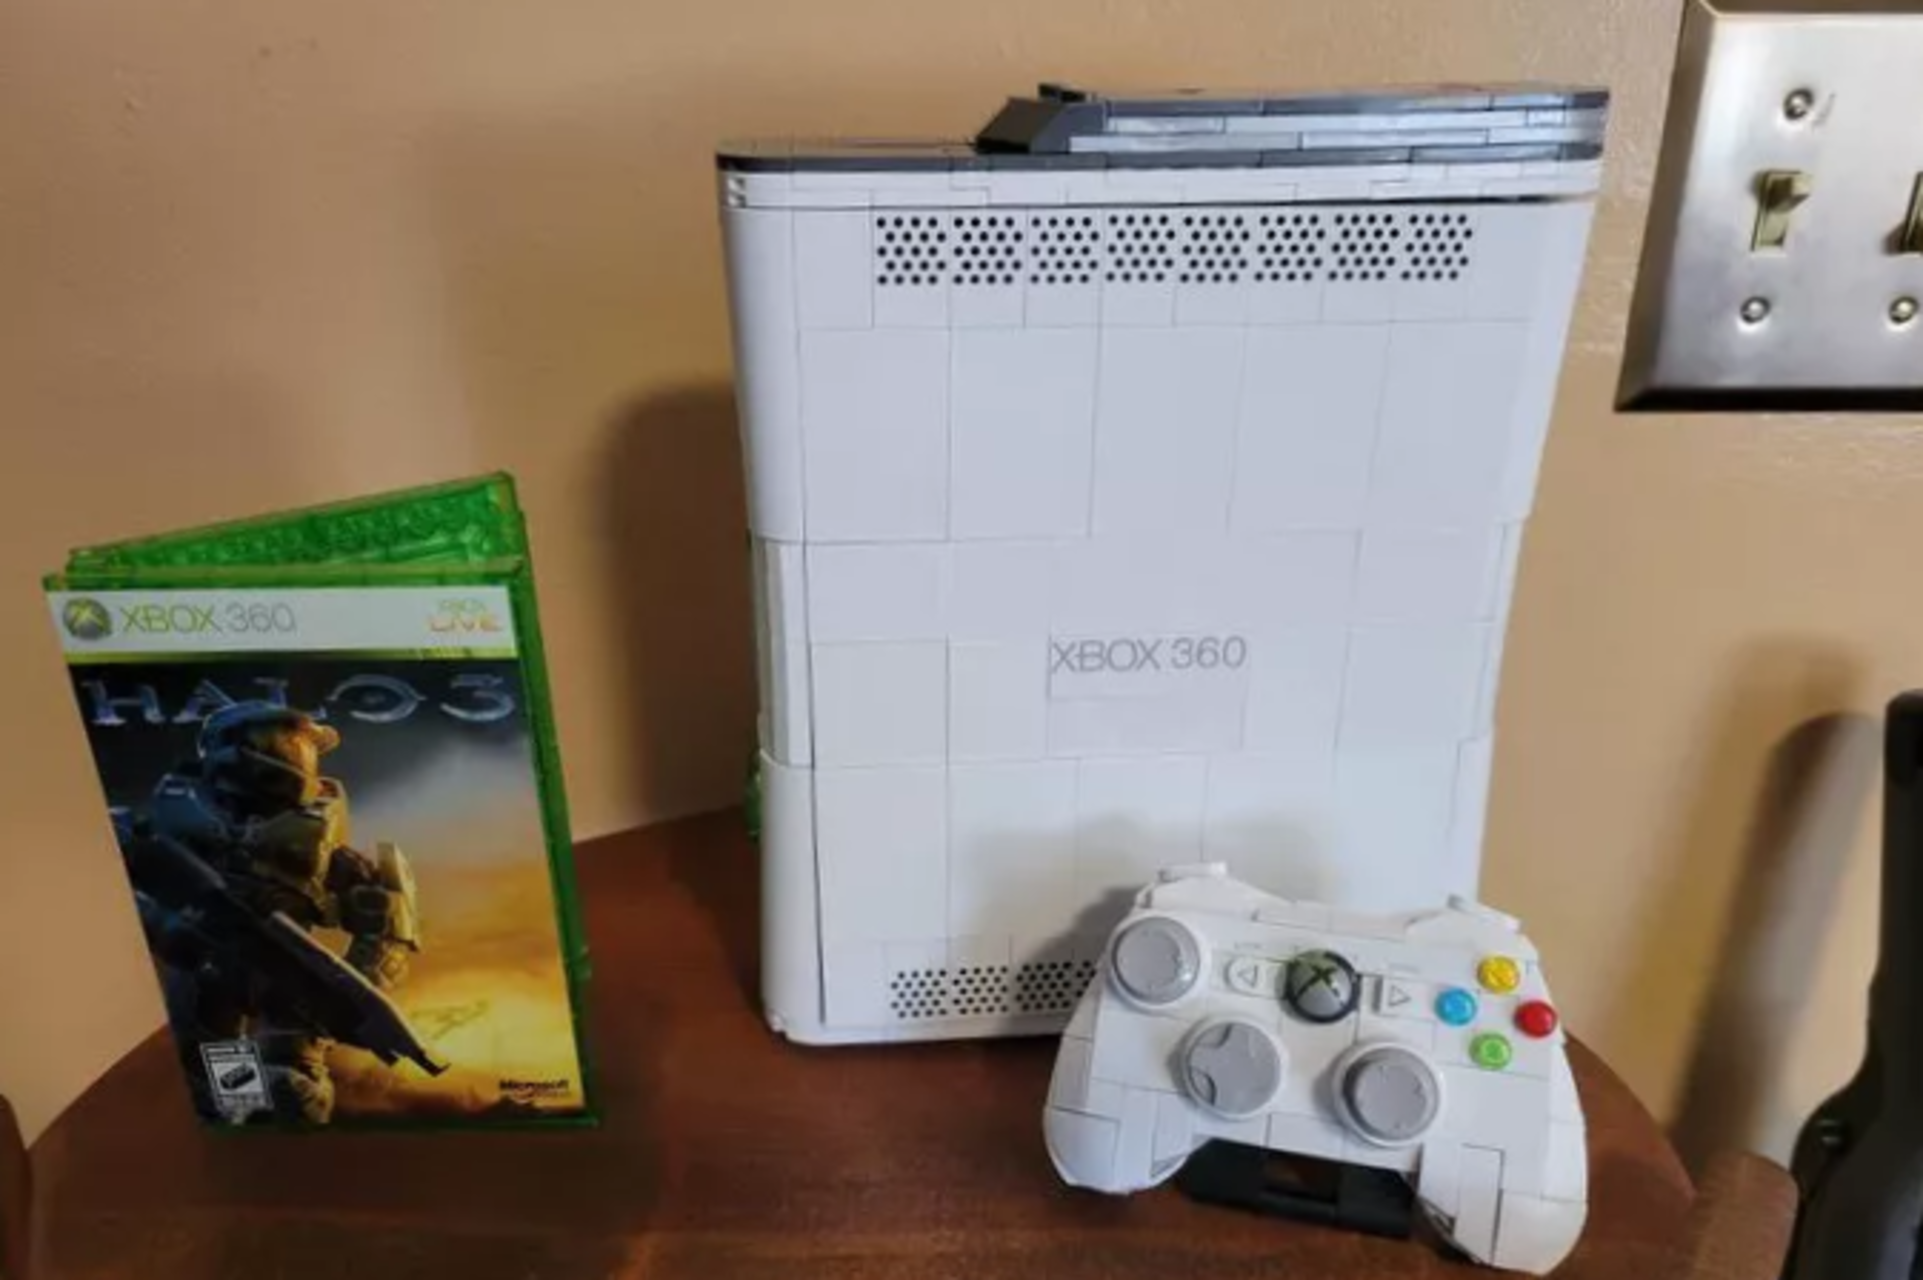 MEGA Showcase Microsoft Xbox 360 collectible at $50 off